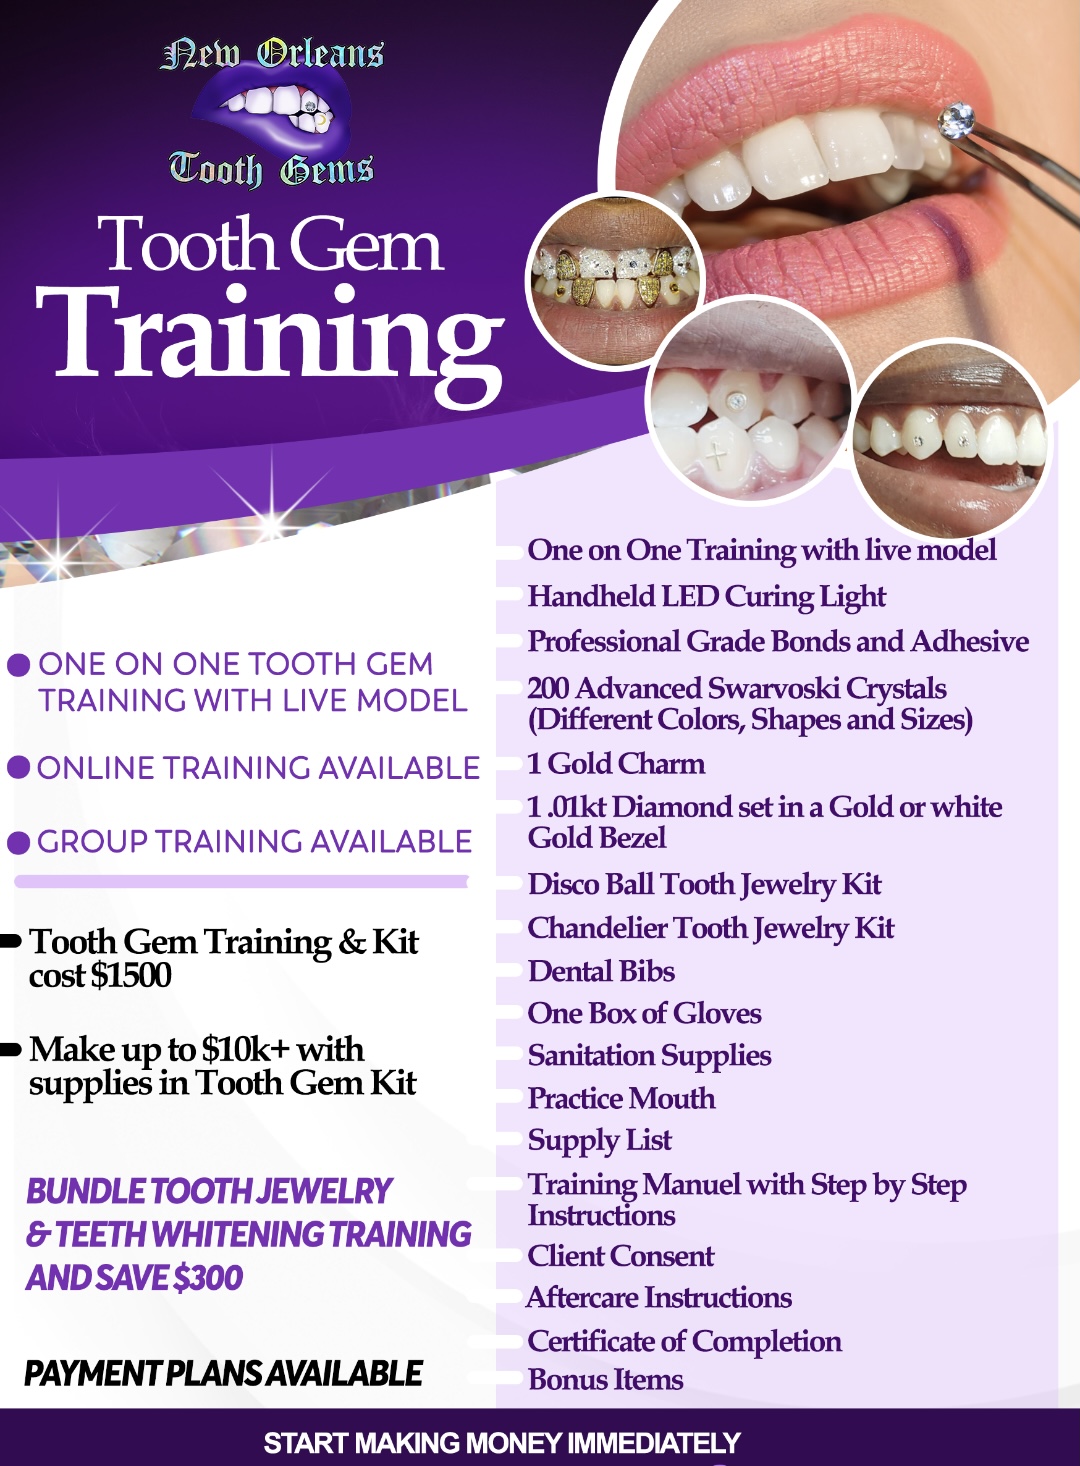 Dual Training (Tooth Gem & Teeth Whitening Training)